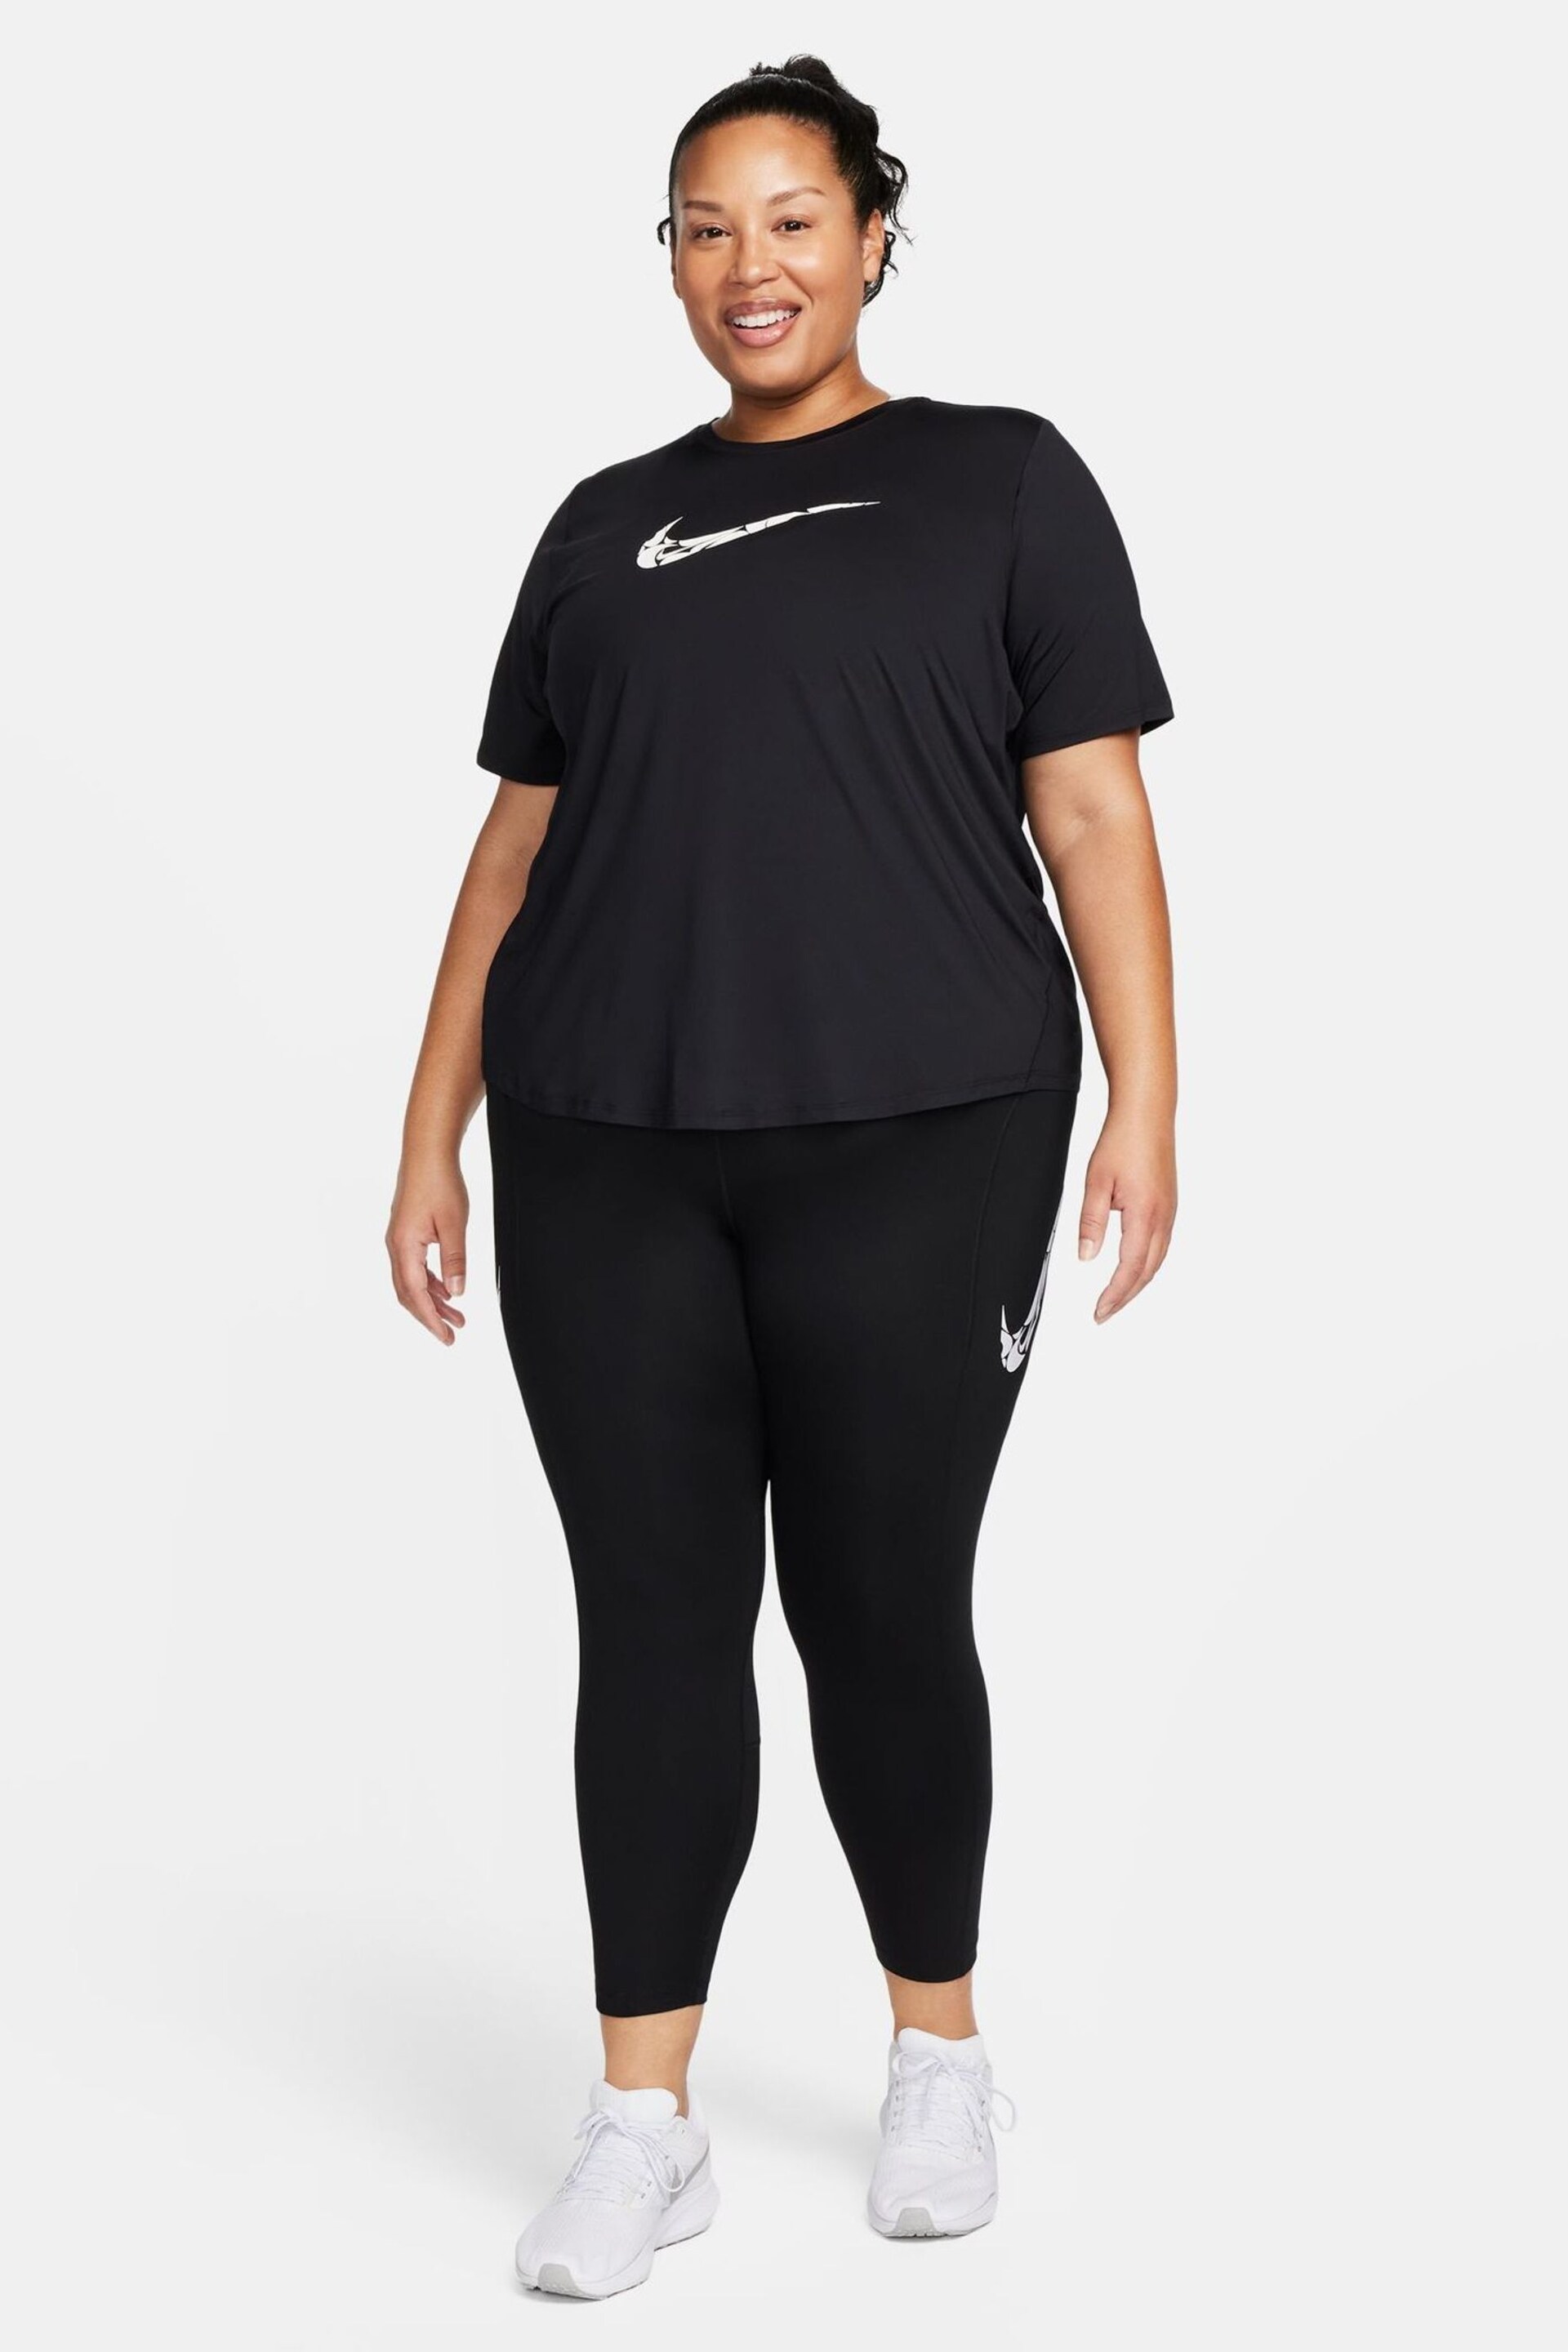 Nike Black Womens Dri-FIT Curve Short Sleeve Running Top - Image 3 of 4